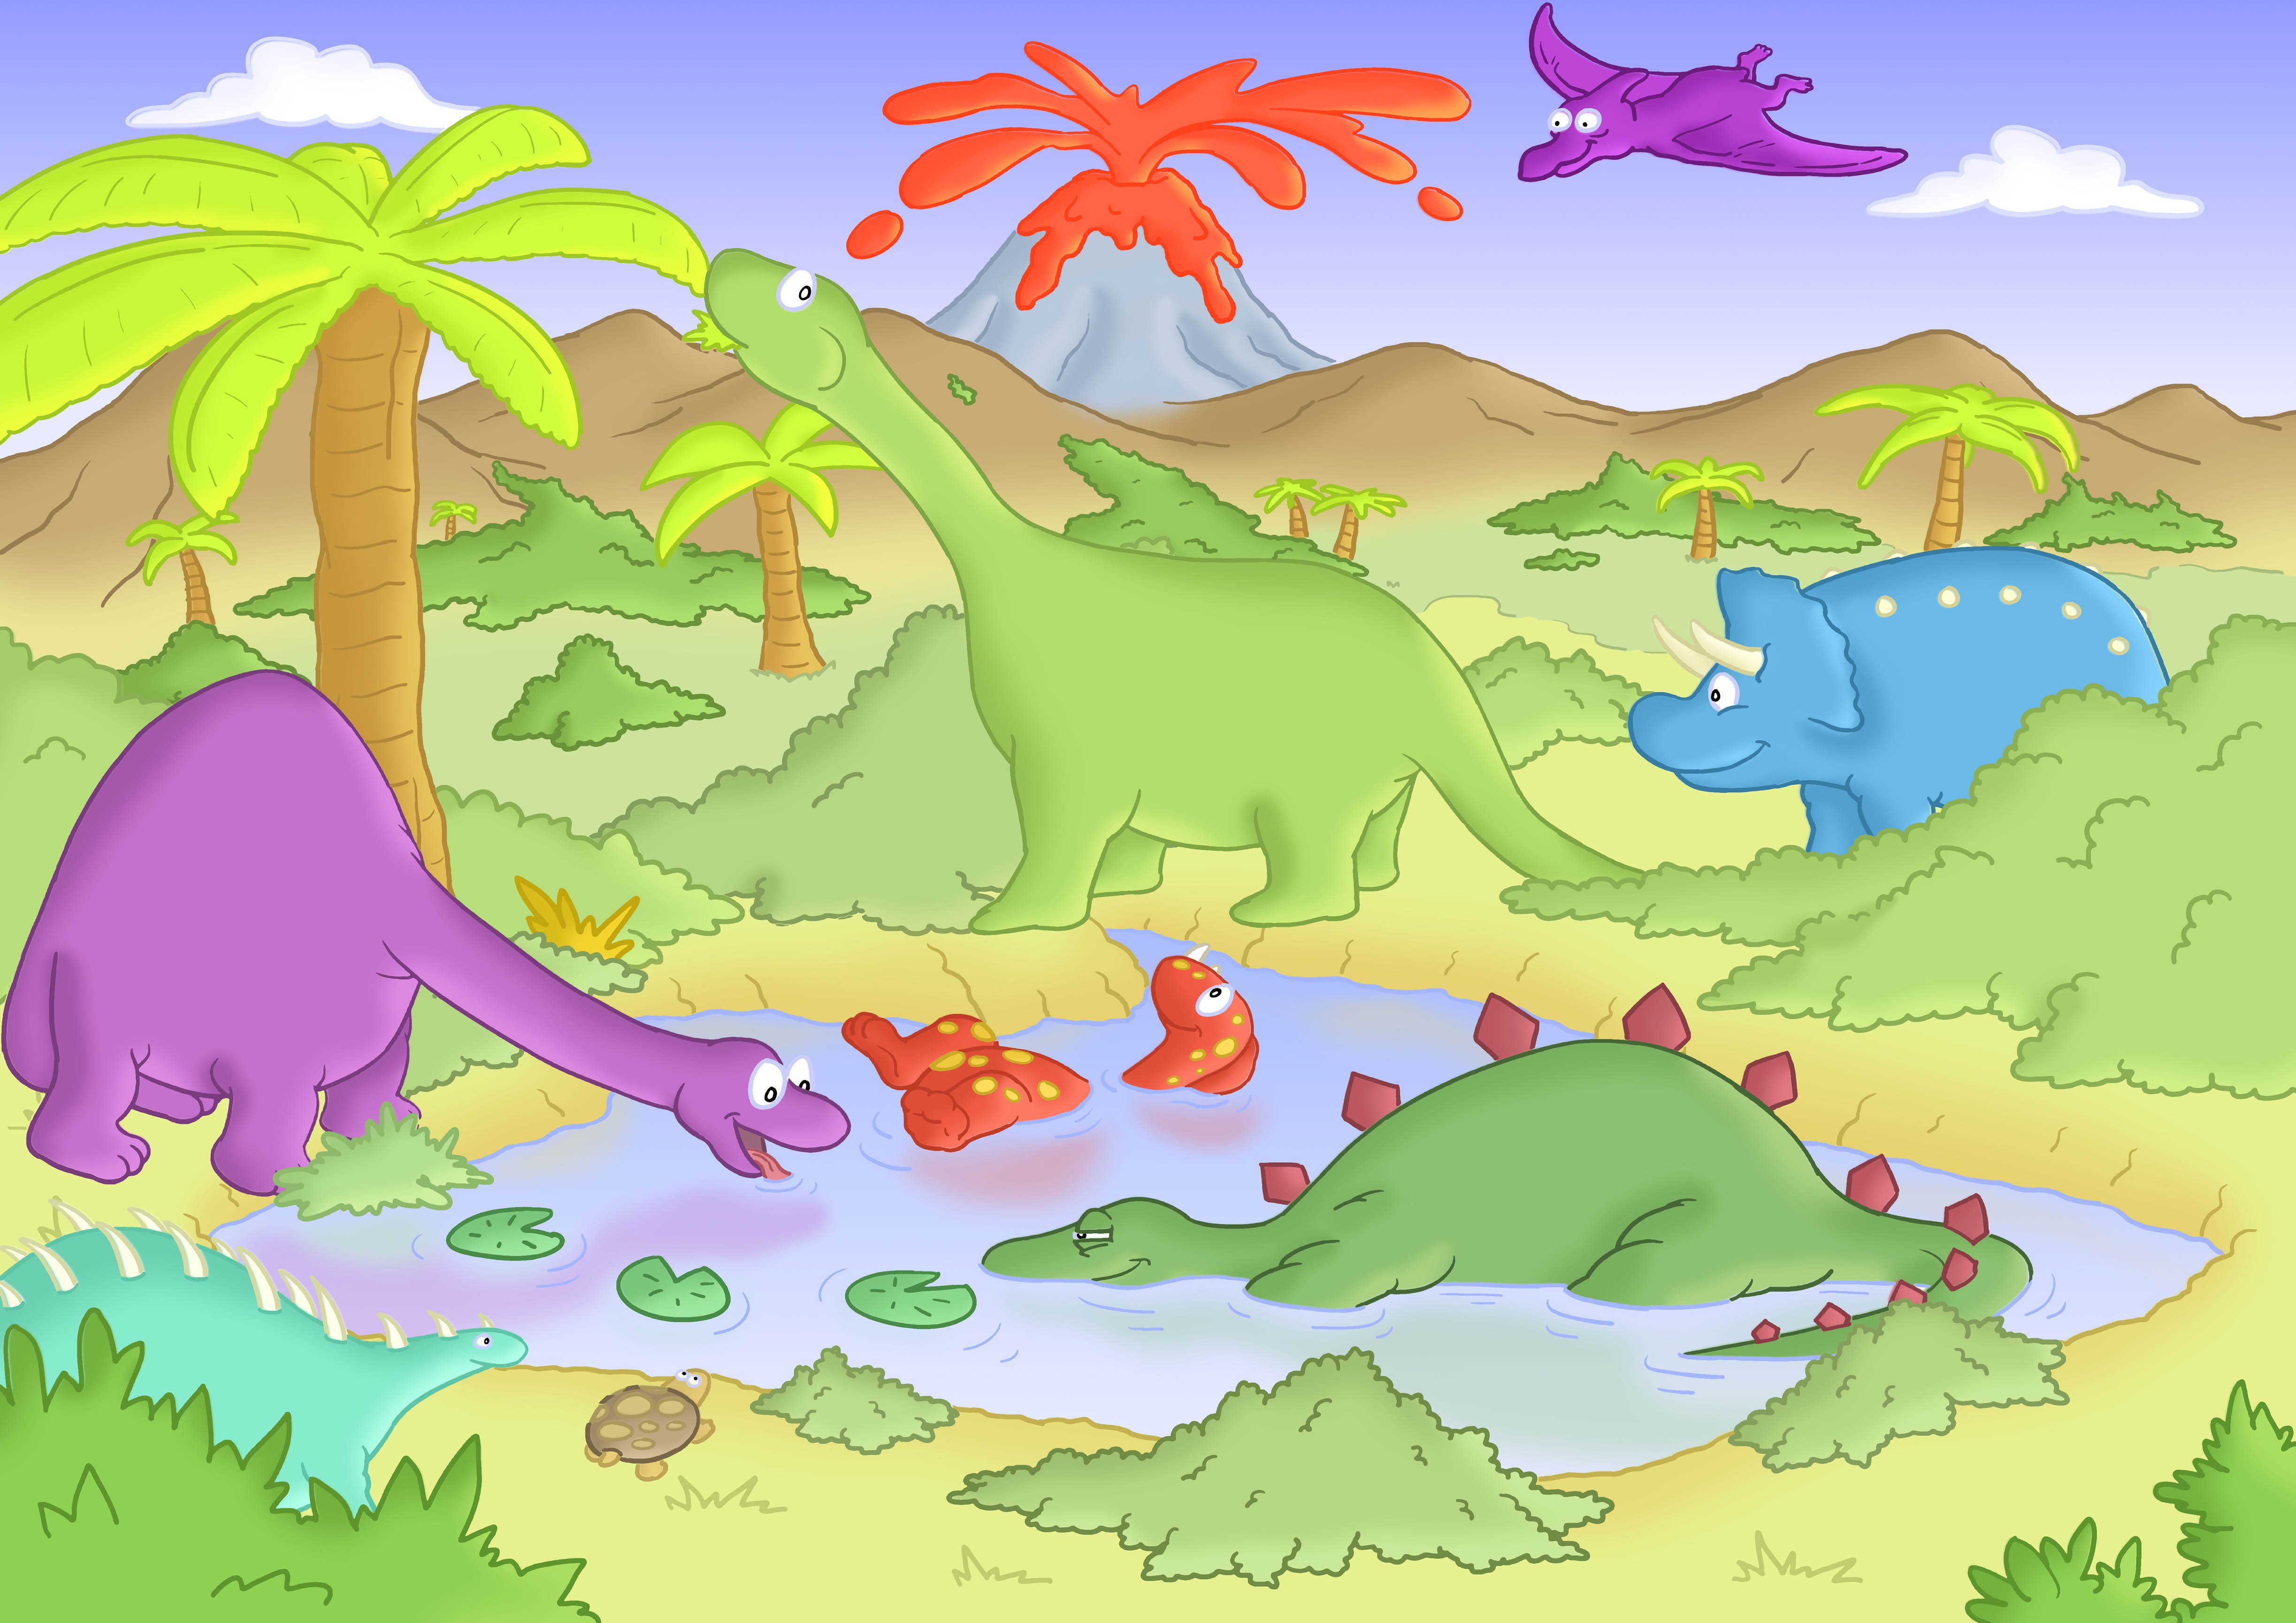 papel pintado de dinosaurios para niños,dibujos animados,dinosaurio,ilustración,selva,arte